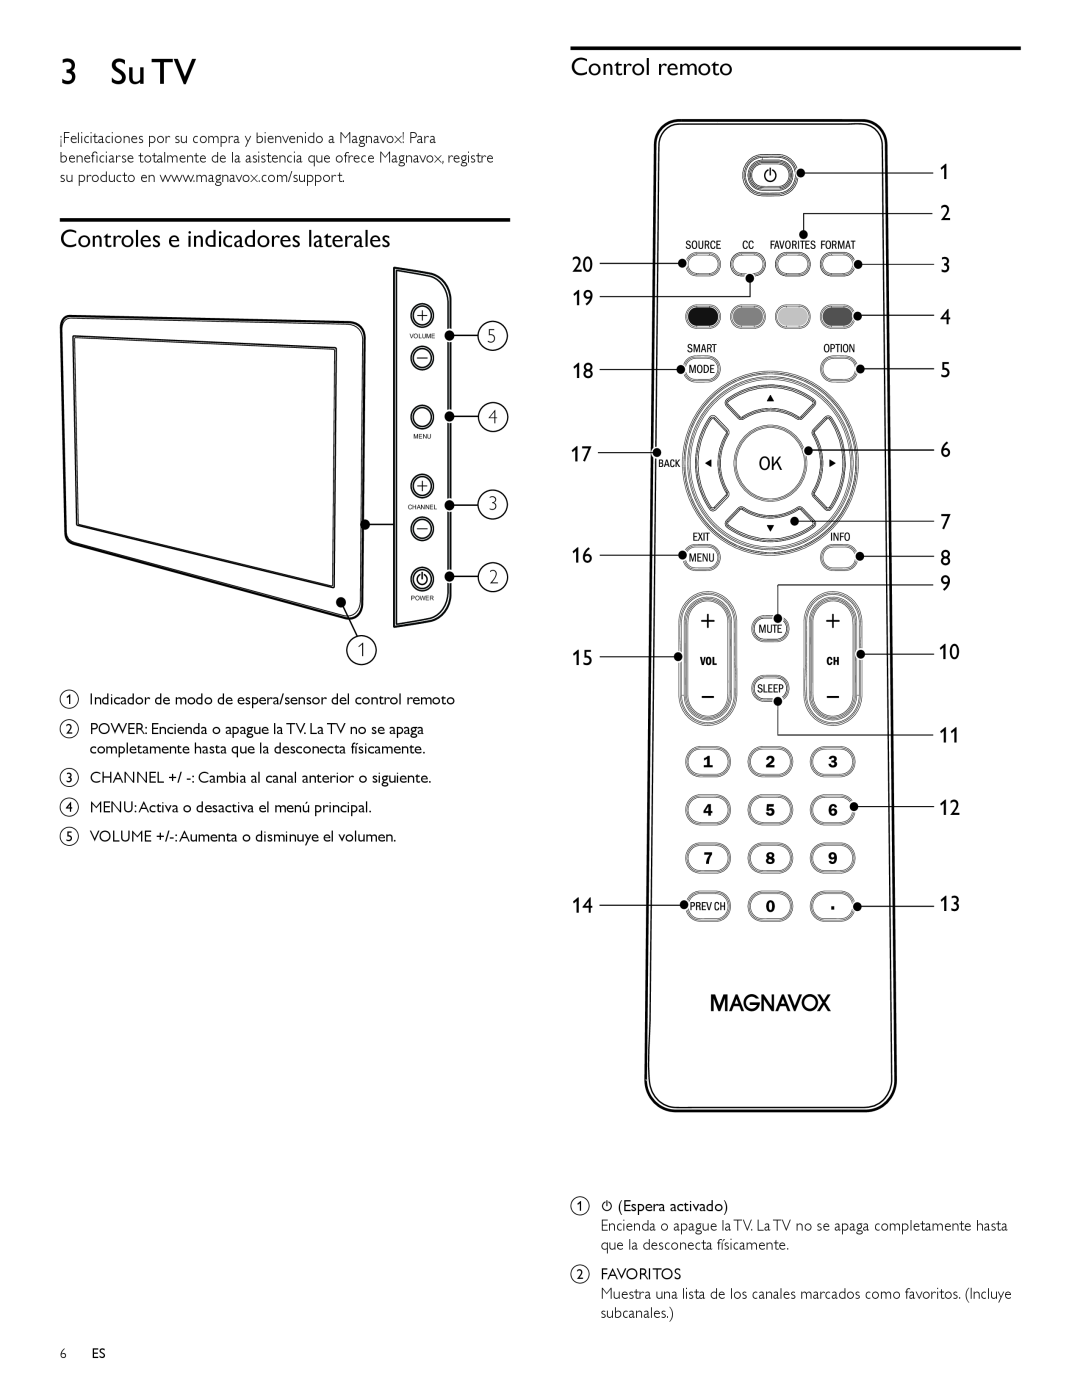 Magnavox 47MF439B user manual Su TV, Controles e indicadores laterales, Control remoto 